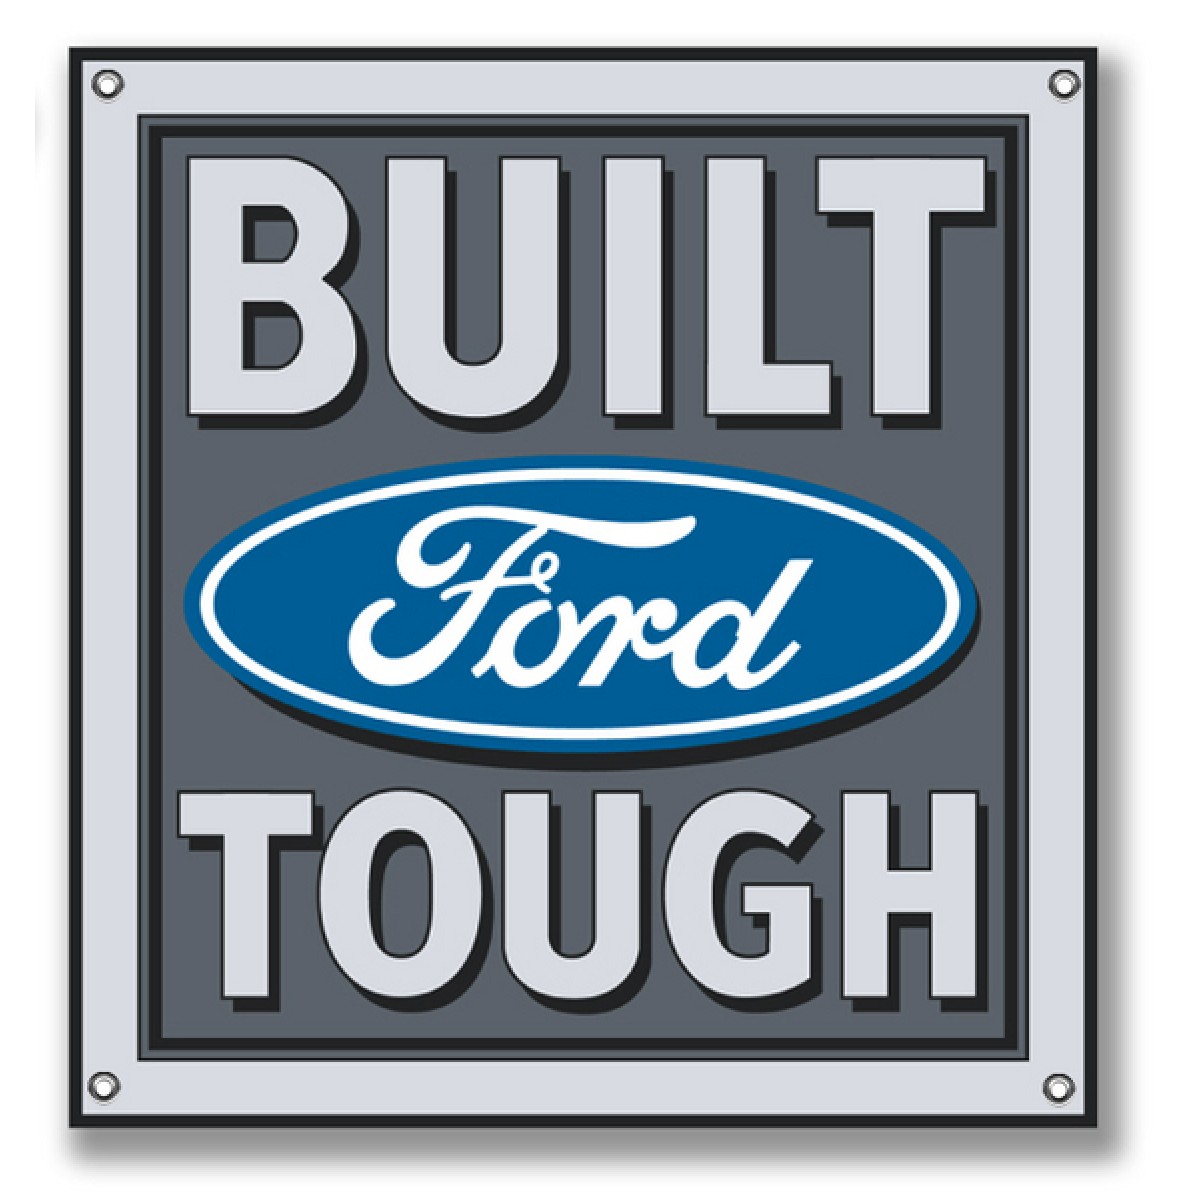 Built Ford Tough Logo Image 529